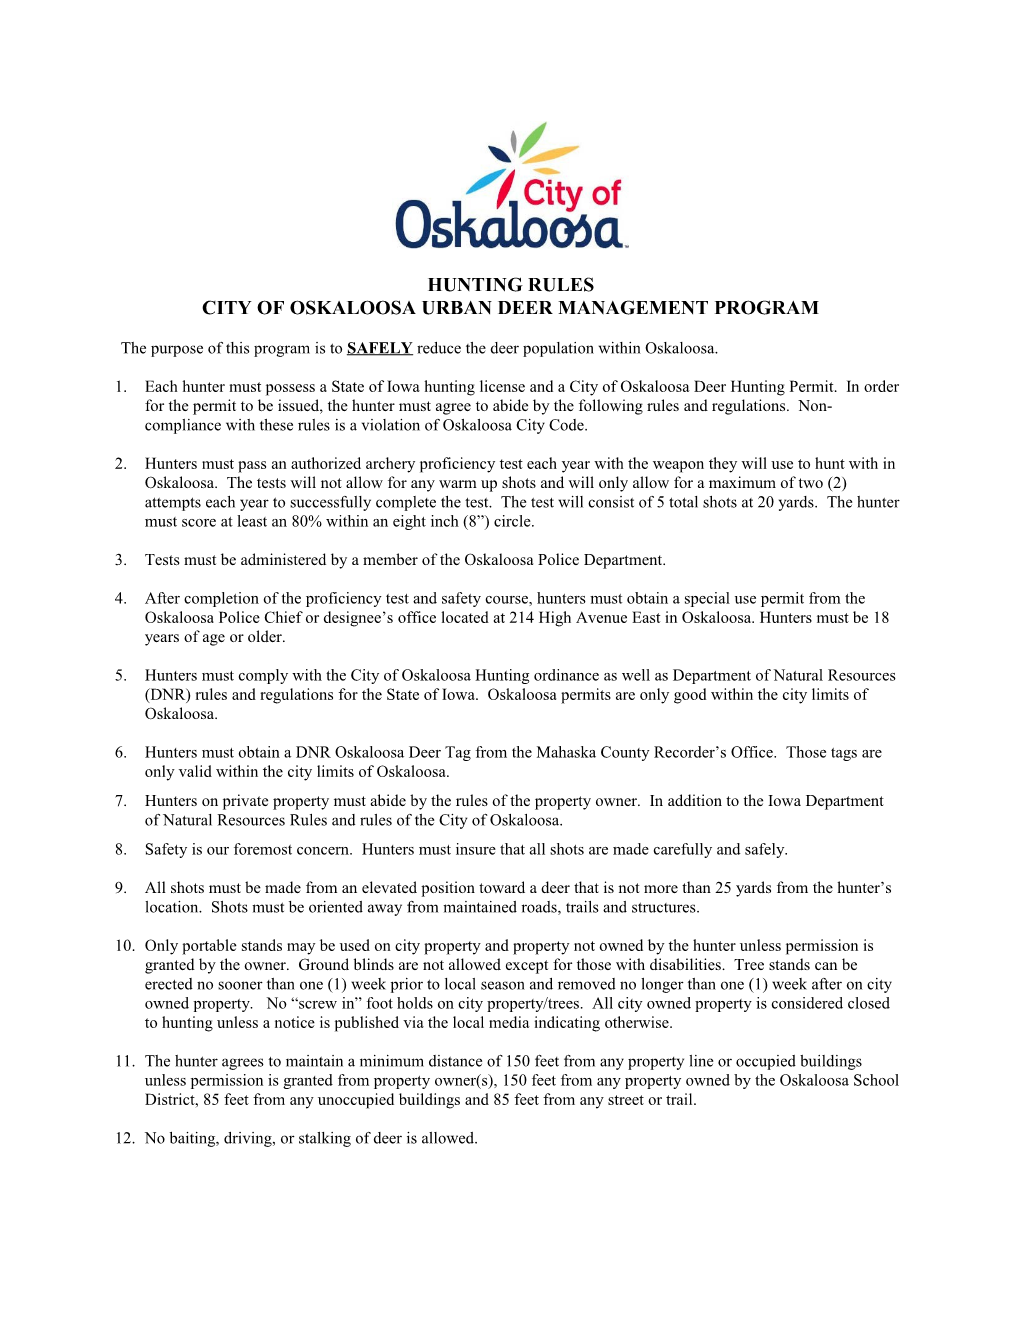 City of Oskaloosa Urban Deer Management Program